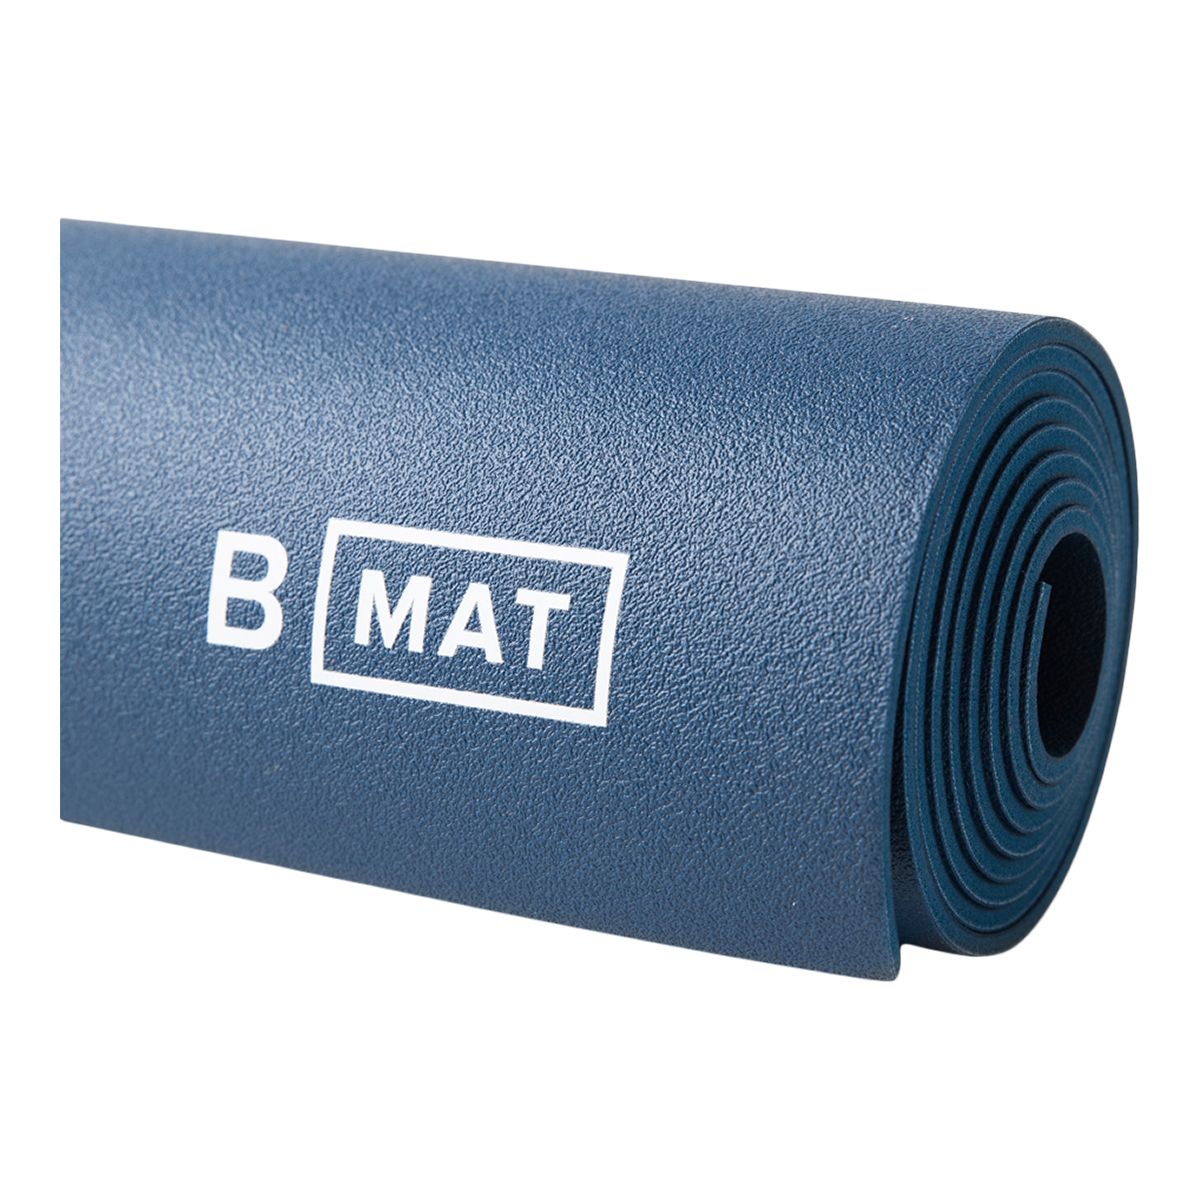 B Yoga Kids' B MAT Mini Yoga Mat, 3mm, Rubber, Superior Grip